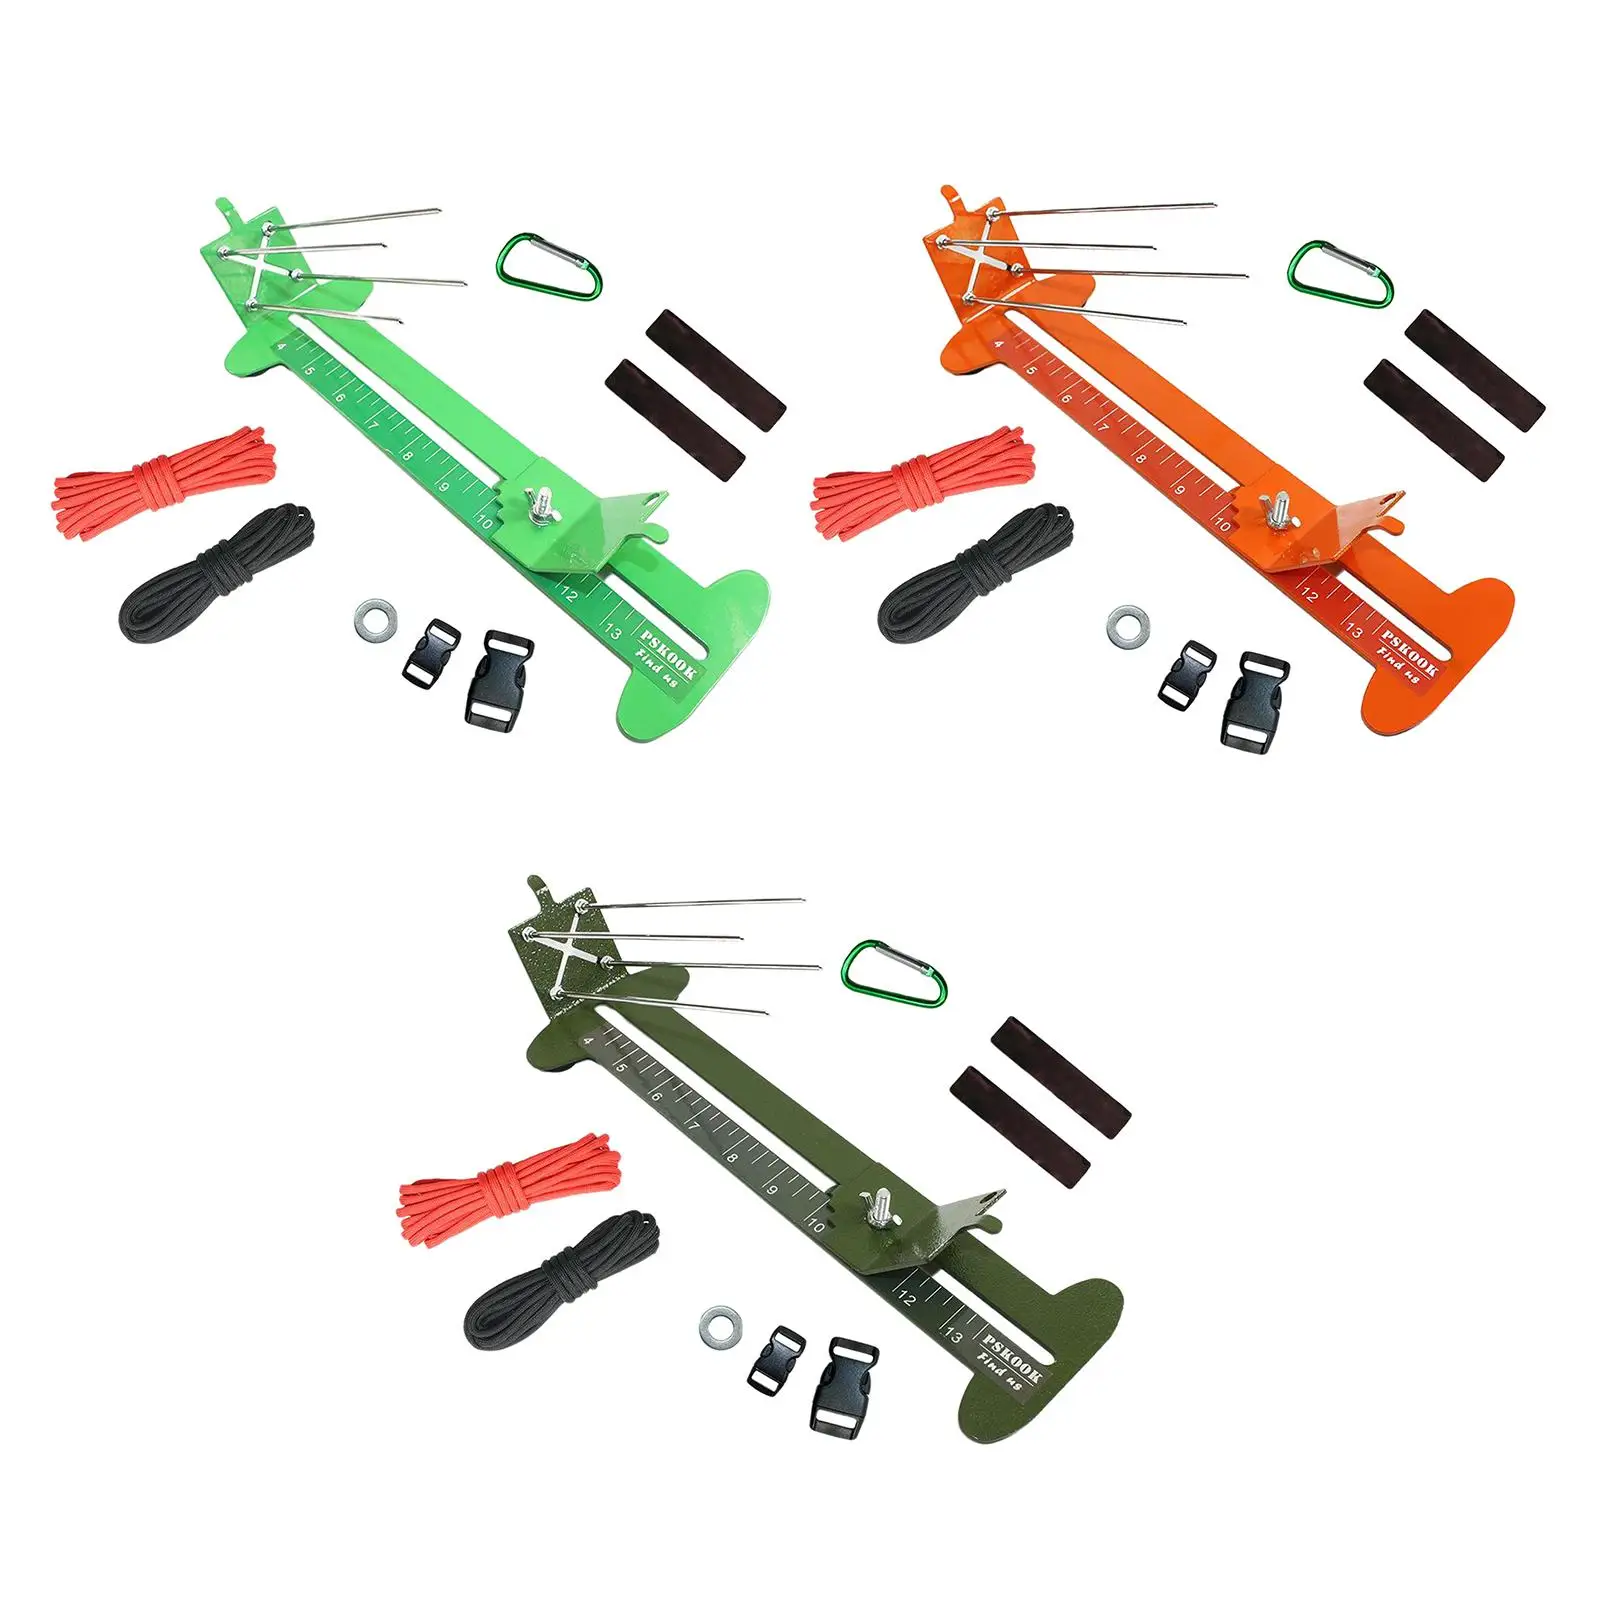 Paracordaa Bracelet Jig Kit for Paracordaa or Leather Work Paracordaa Tool Adjustable Length Paracordaa Jig Bracelet Maker